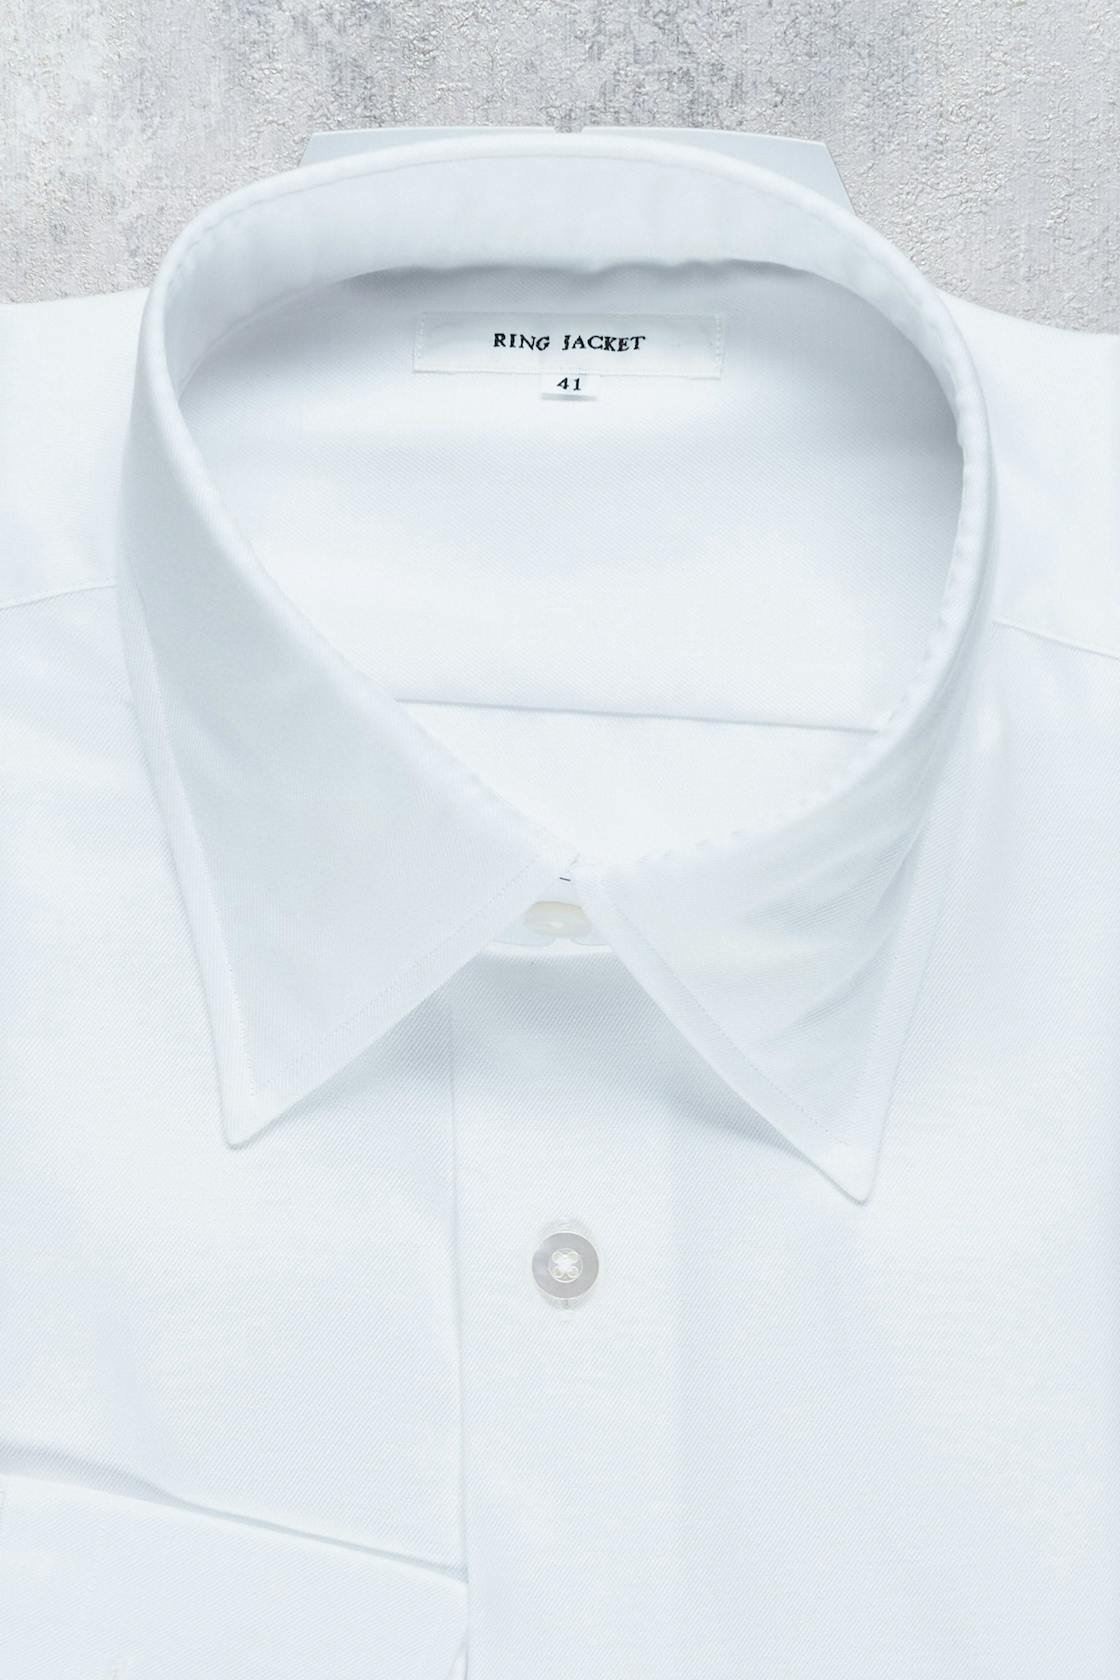 Ring Jacket RBKS-11 White Cotton Twill Spread Collar Shirt